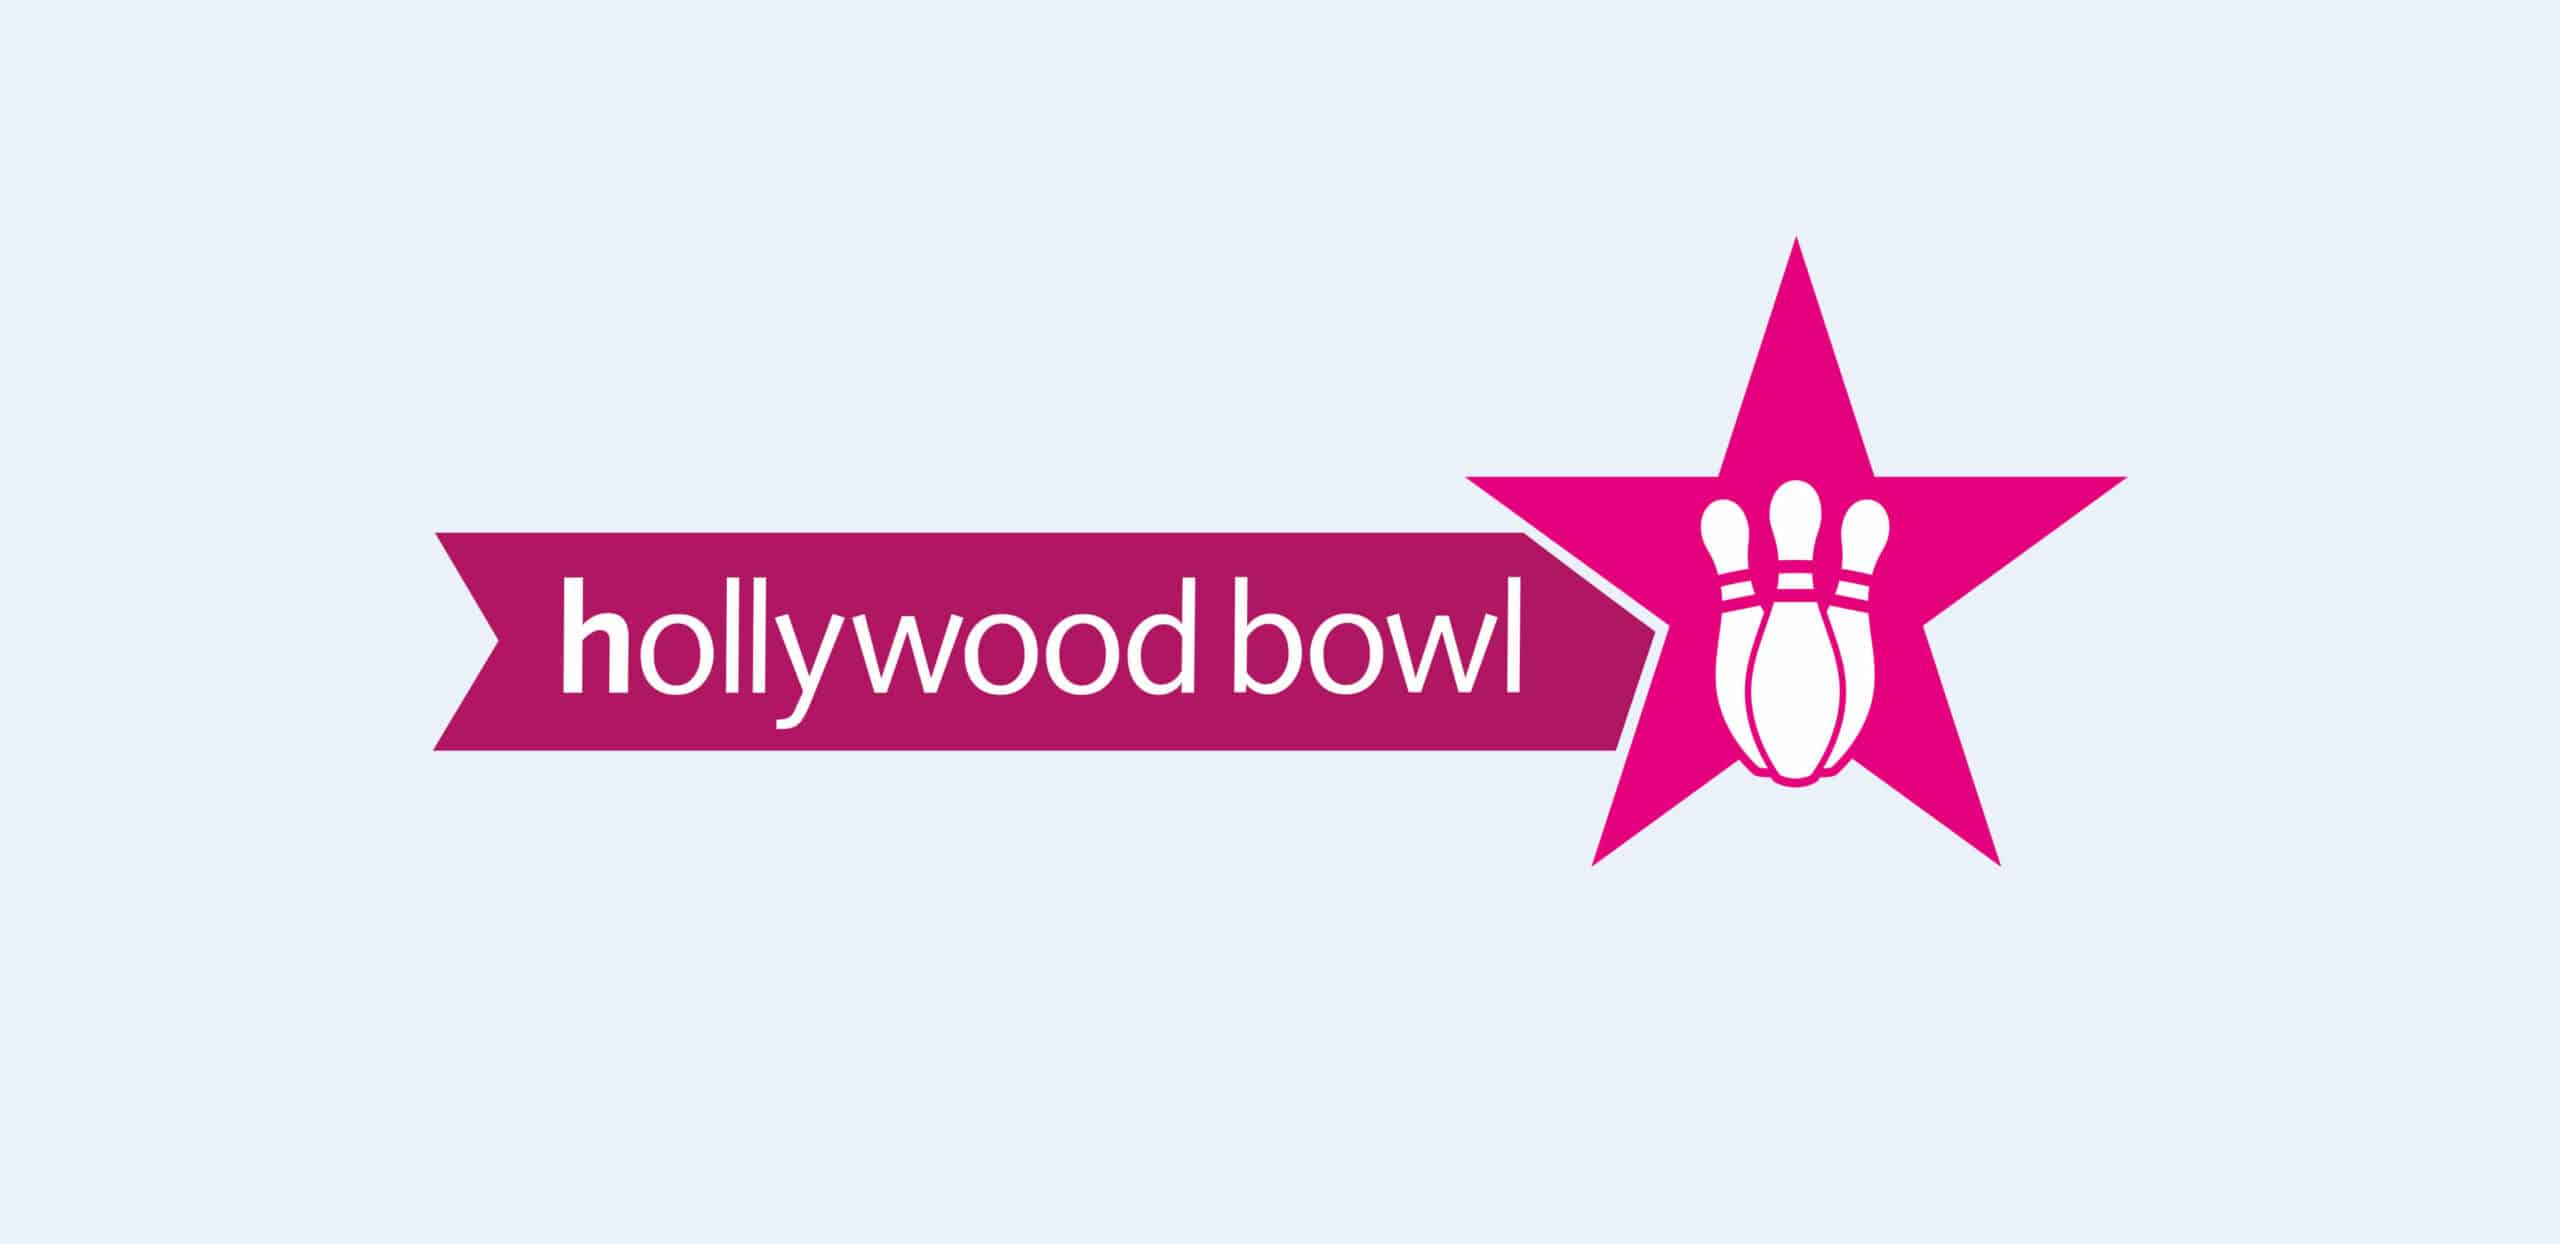 Hollywood Bowl New Brand